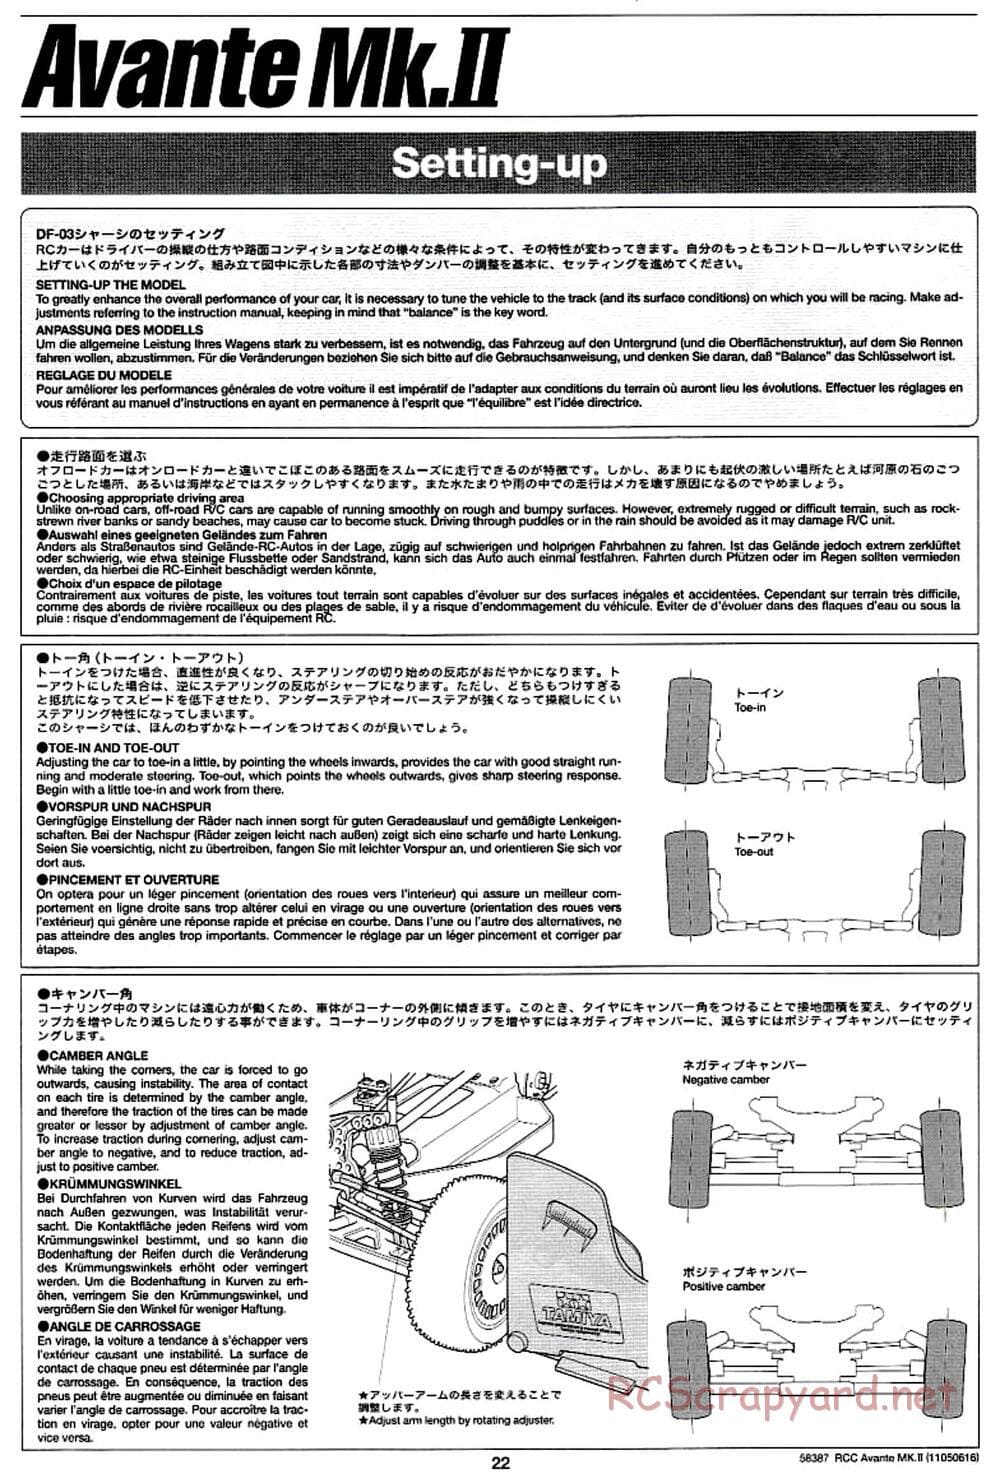 Tamiya - Avante Mk.II Chassis - Manual - Page 22